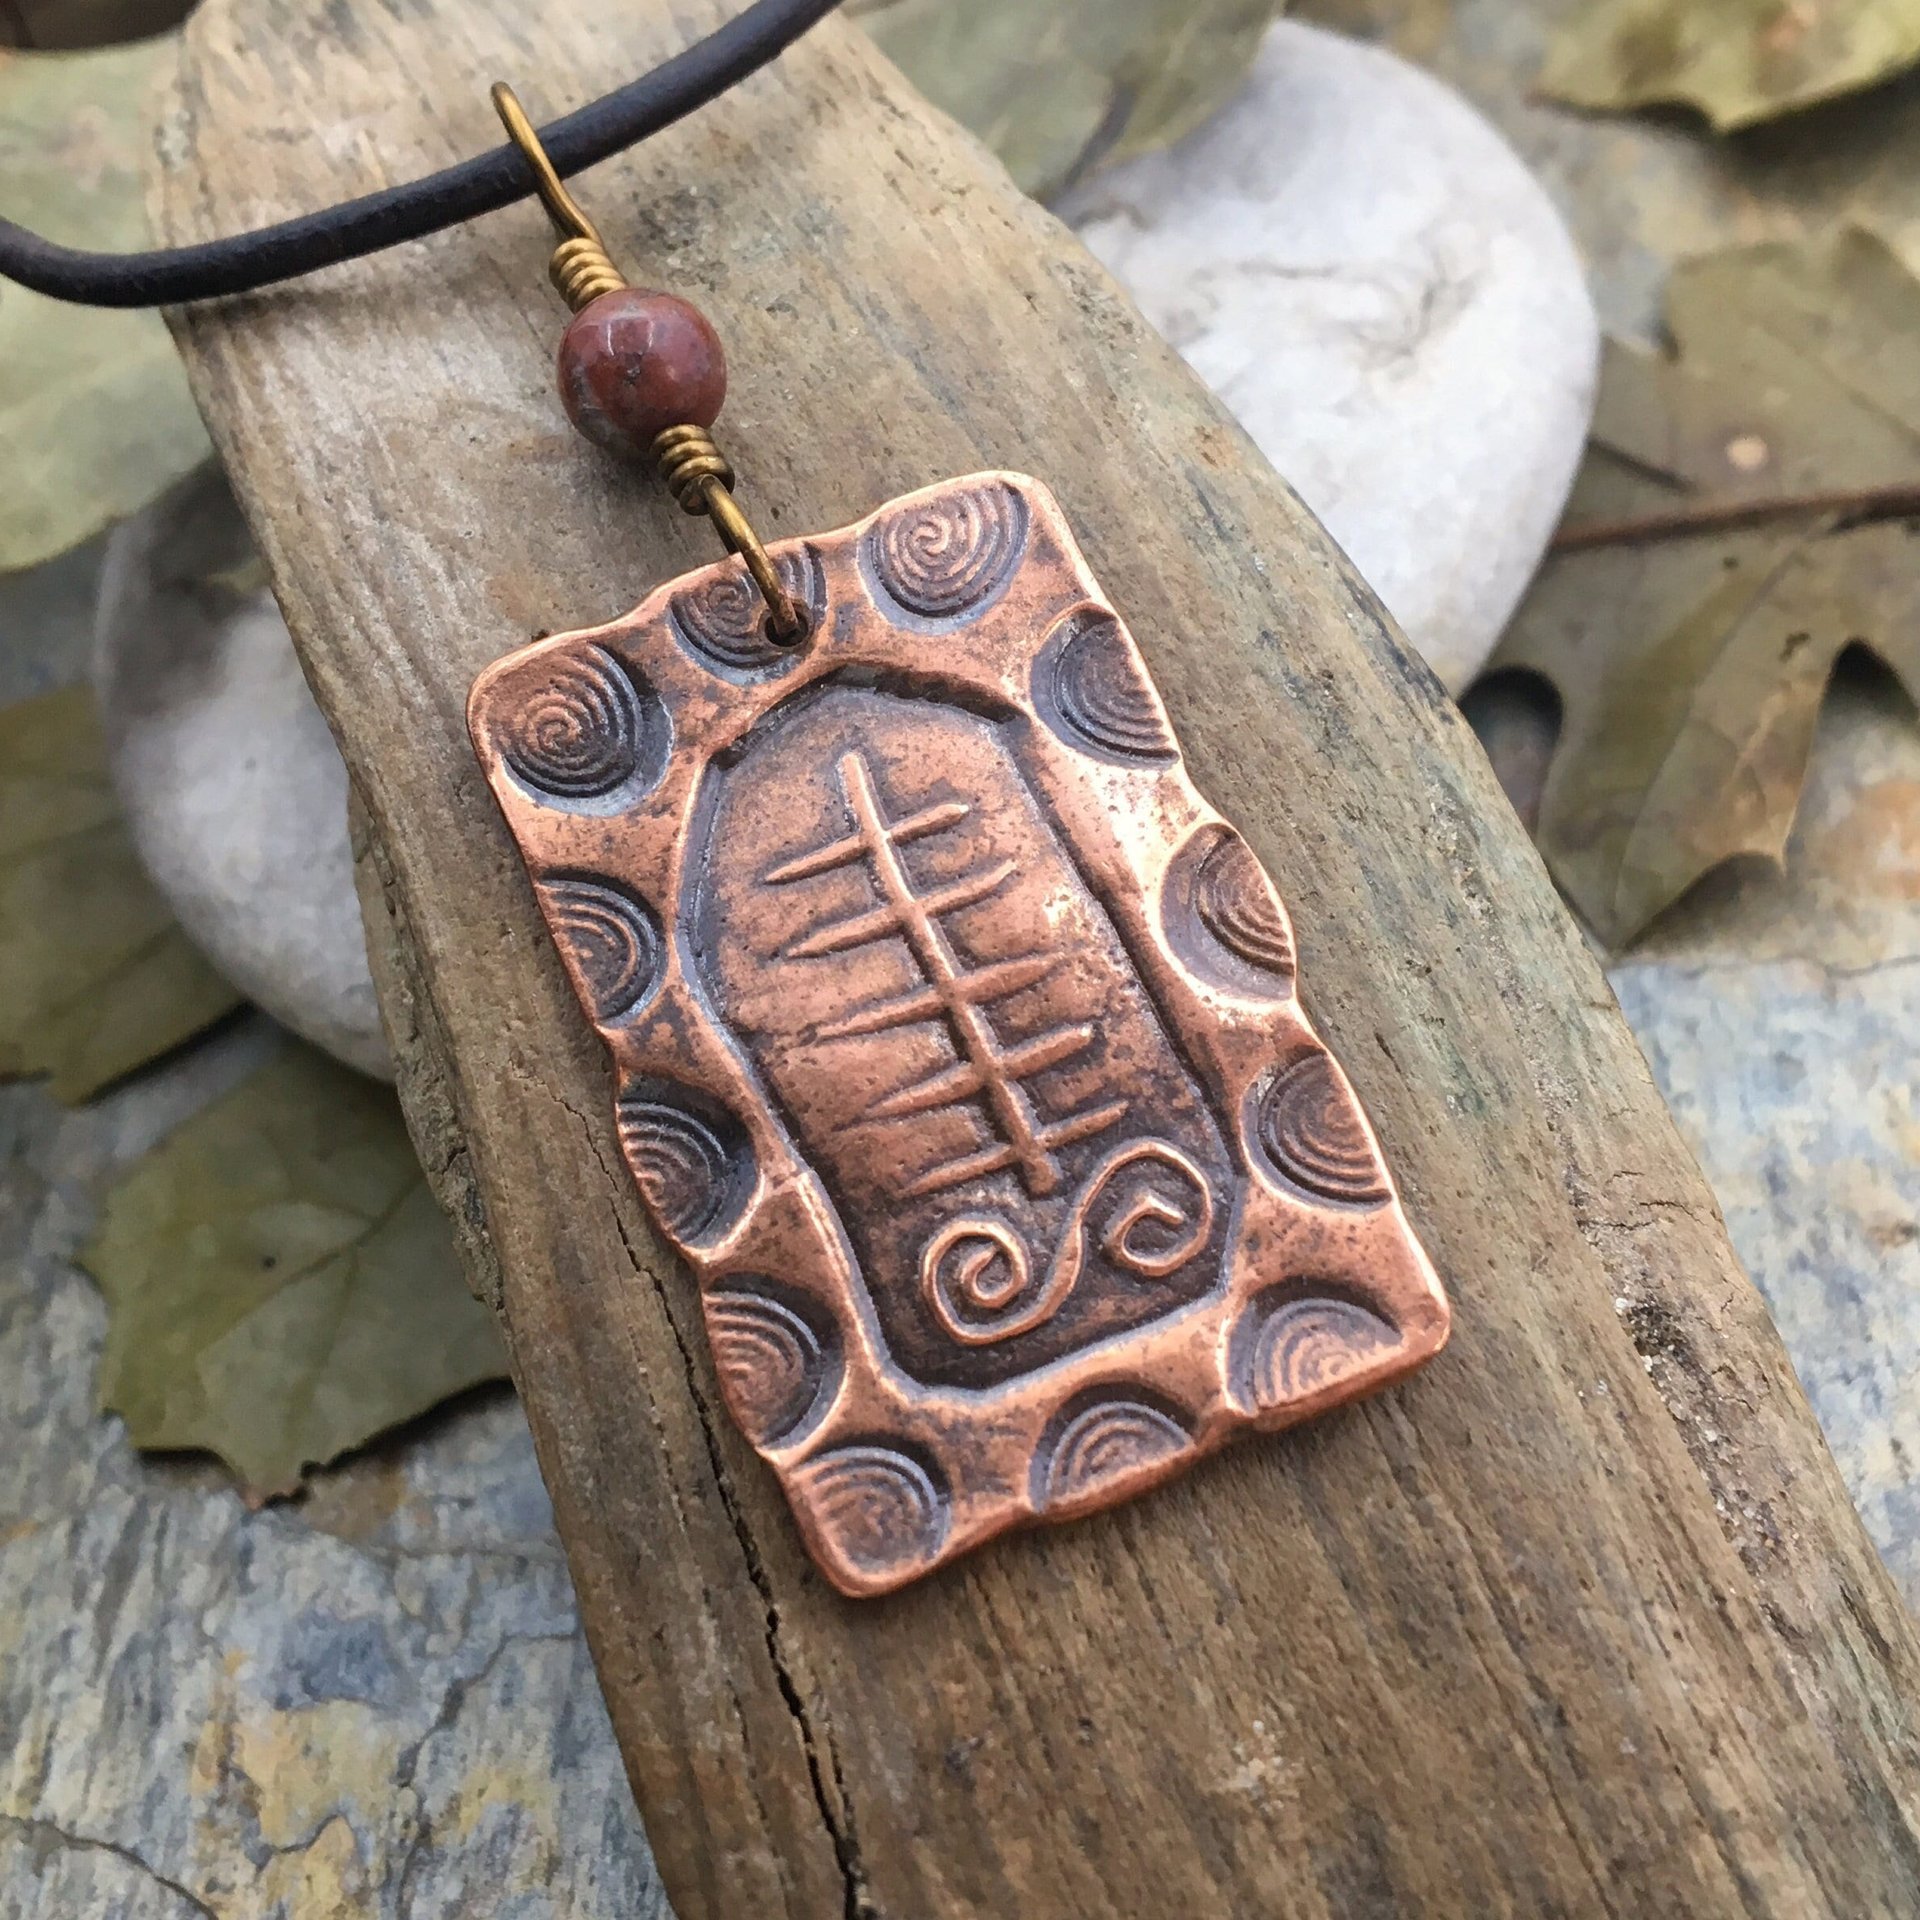 Yew Tree Ogham Charm, Copper Pendant, Connemara Marble, Hand Carved, Irish Celtic, Druid Trees, Leather & Vegan Cords, Handmade Art Jewelry